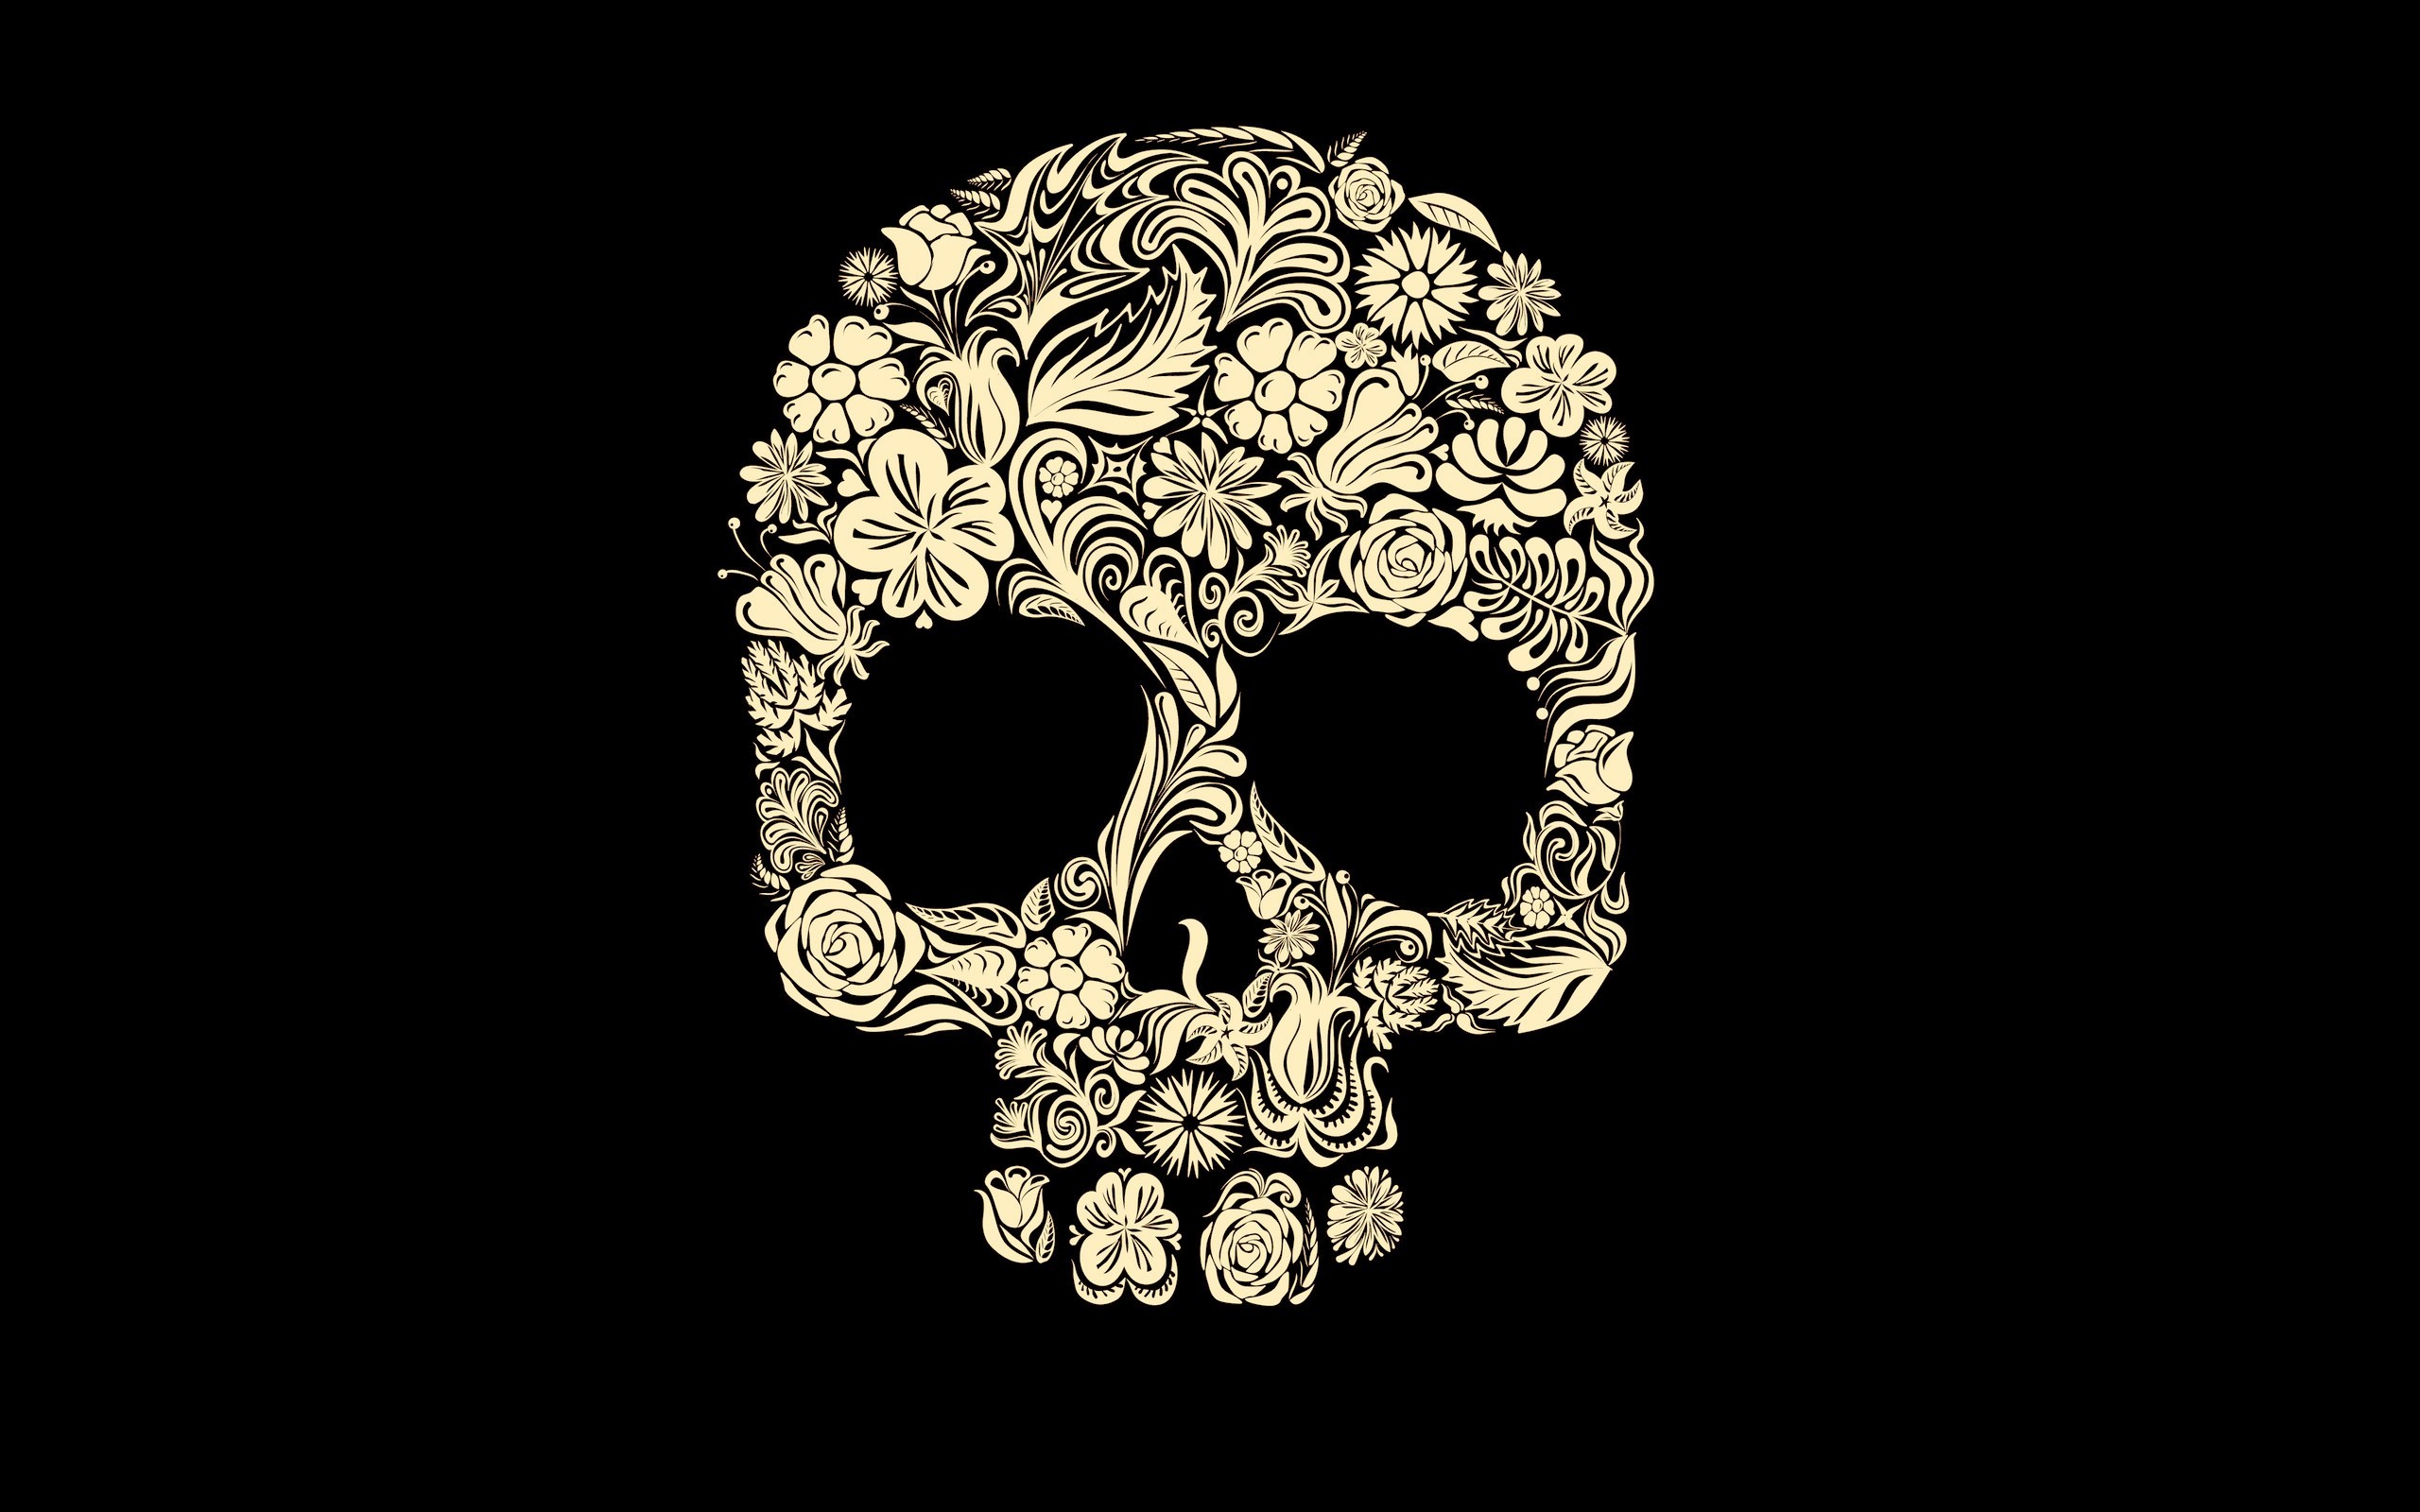 General 2560x1600 digital art skull death artwork minimalism simple background black background